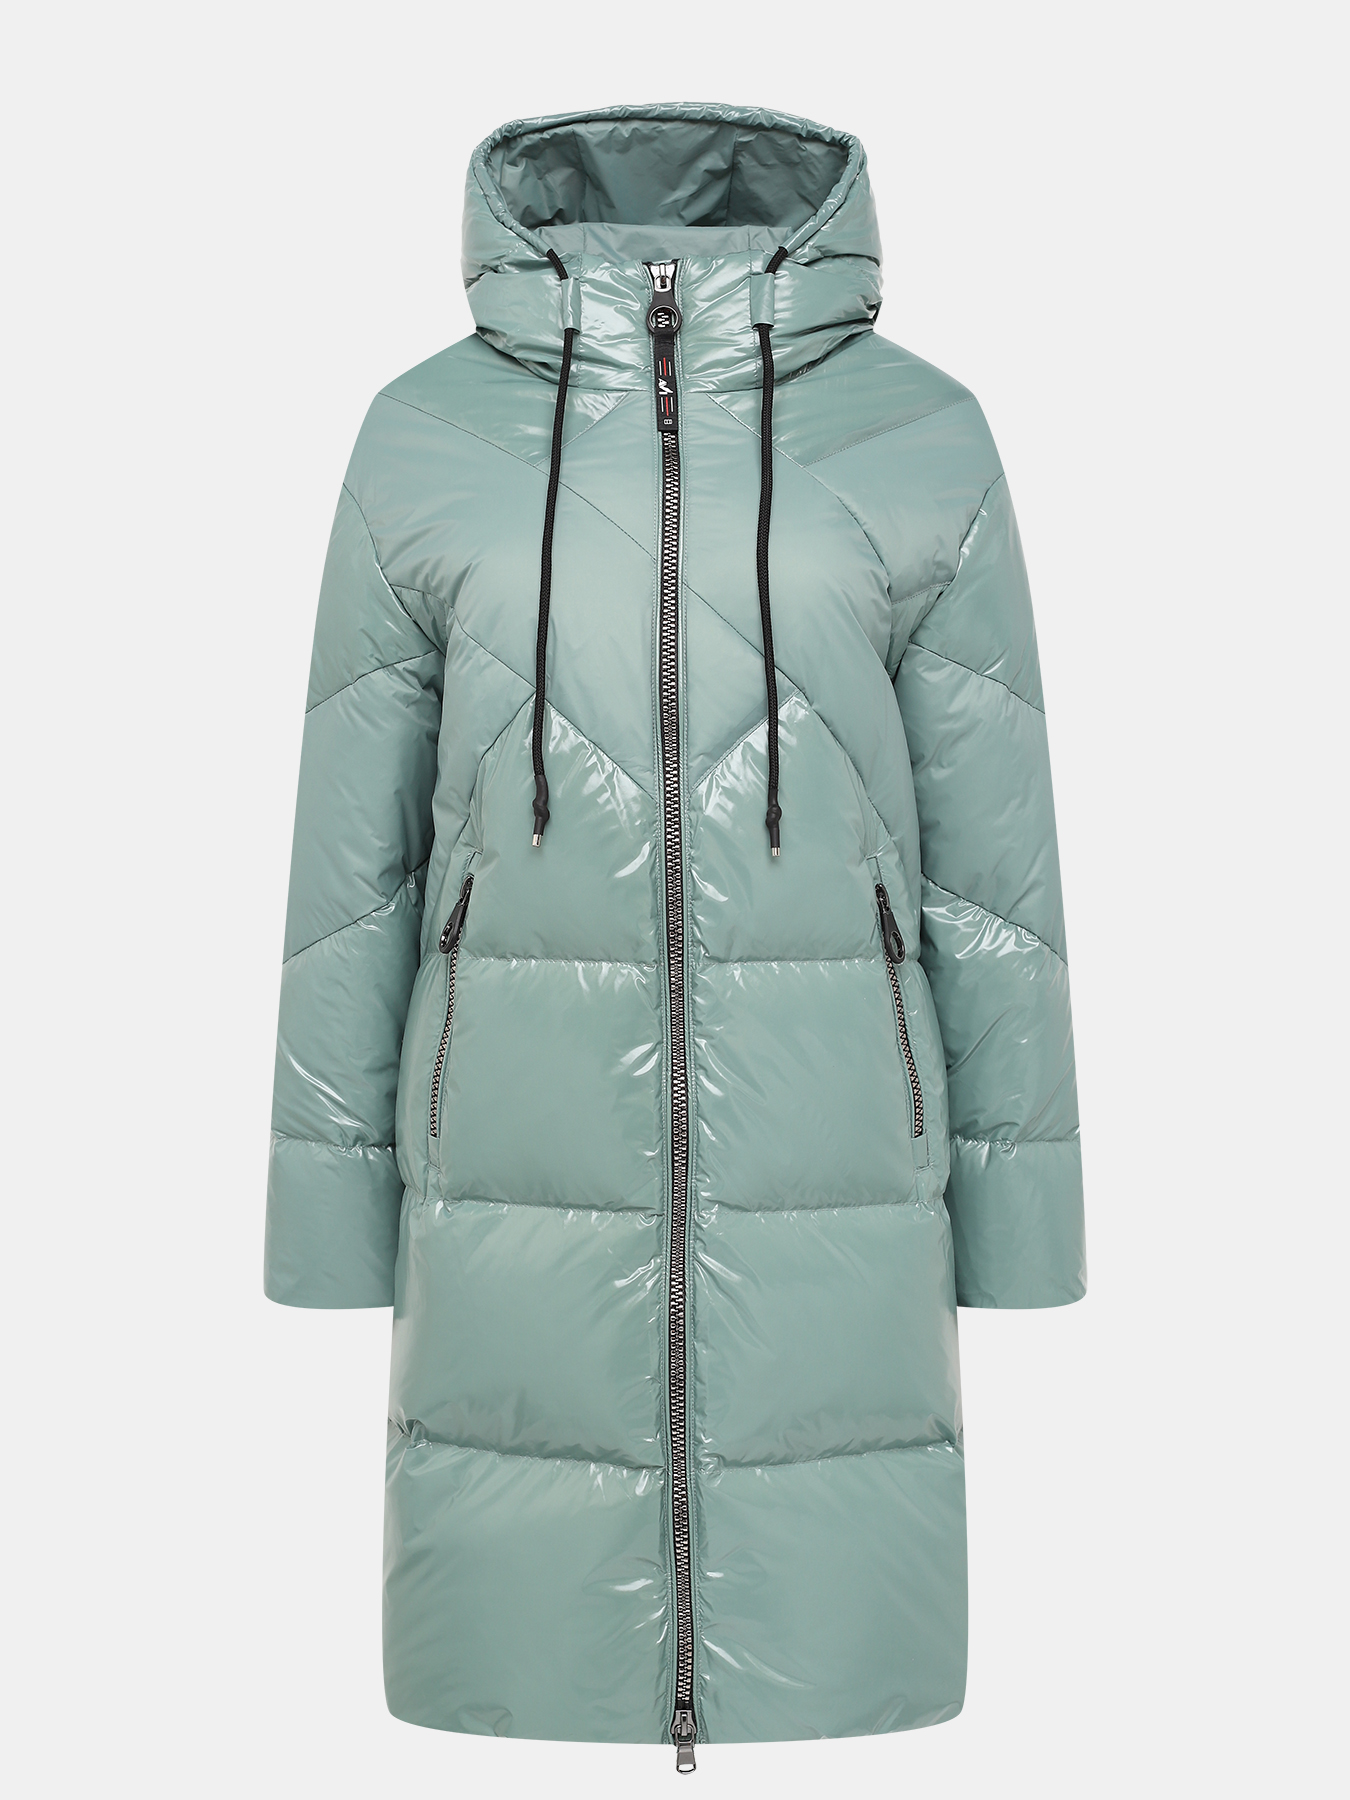 Пальто зимнее AVI 433635-022, цвет мятный, размер 48 - фото 1